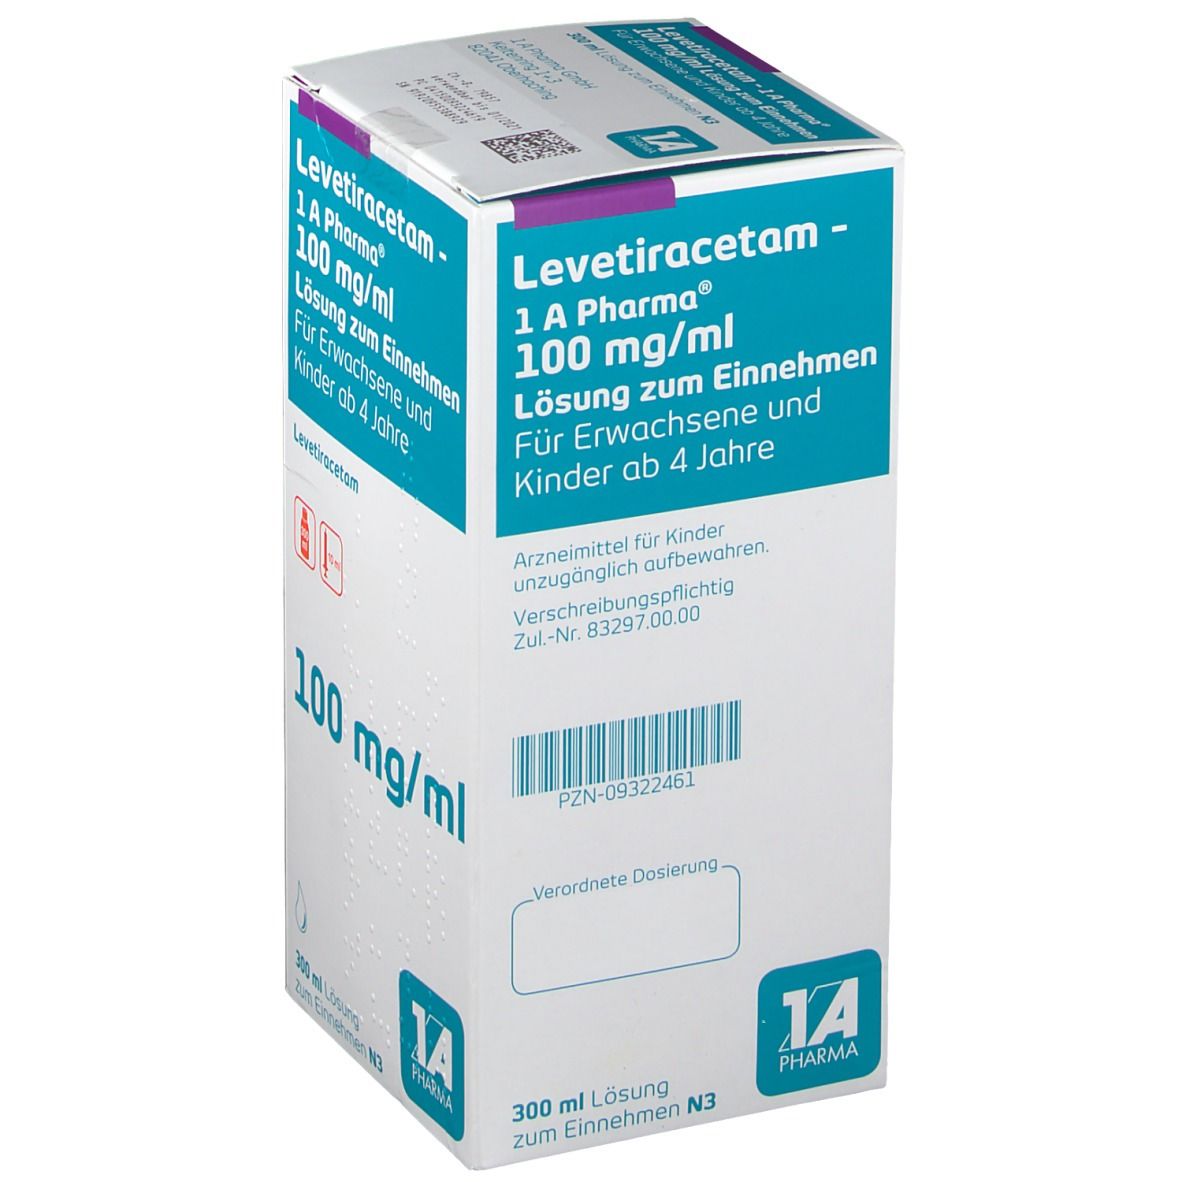 Levetiracetam - 1 A Pharma® 100 mg/ml